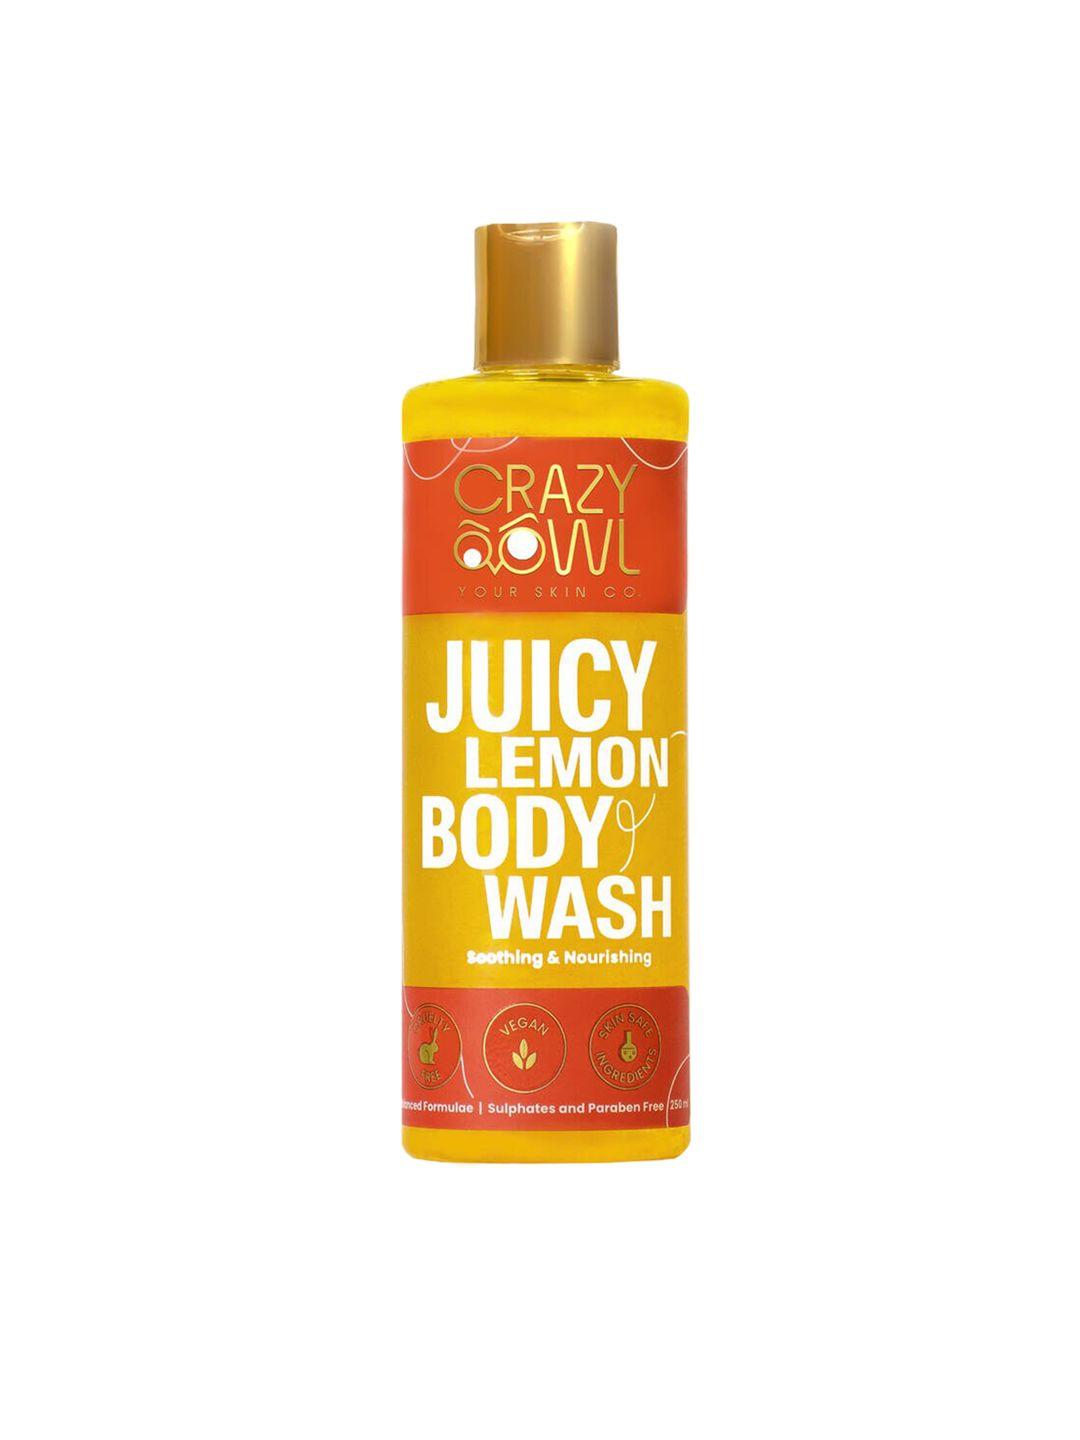 CRAZY OWL Juicy Lemon Body Wash For Soothing & Nourishing - 250ml